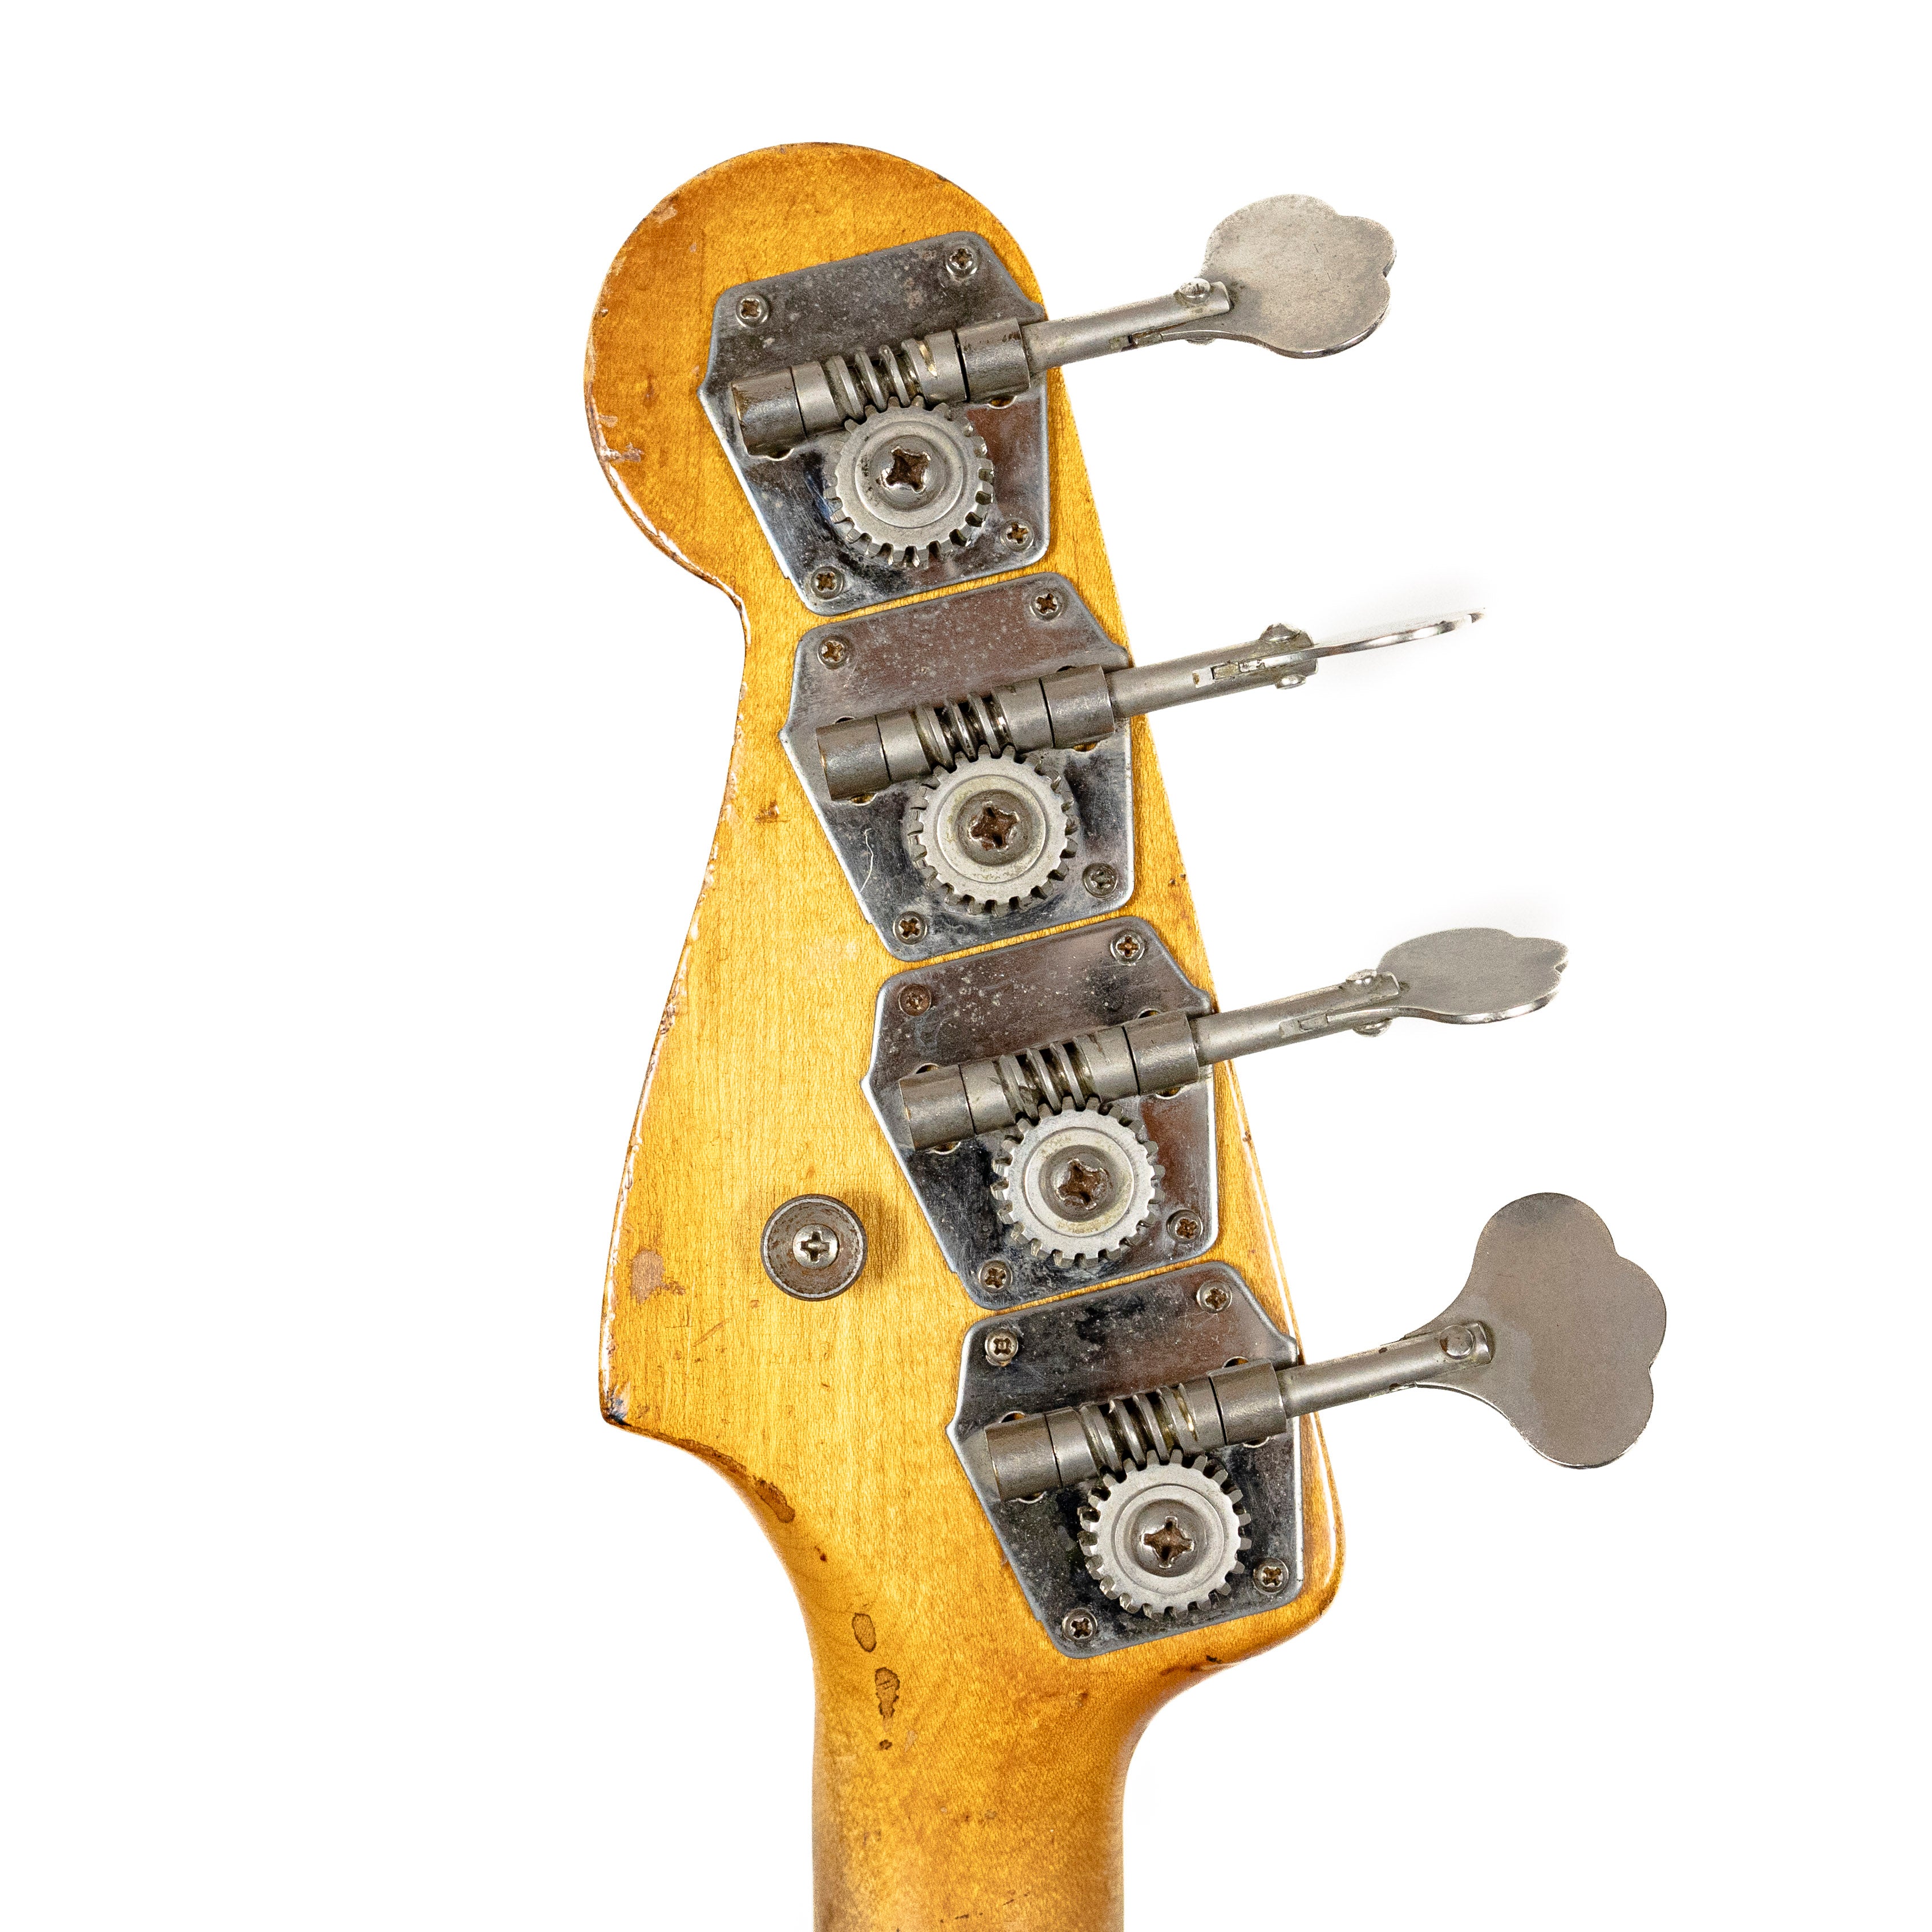 Fender 1961 Precision Bass Sunburst